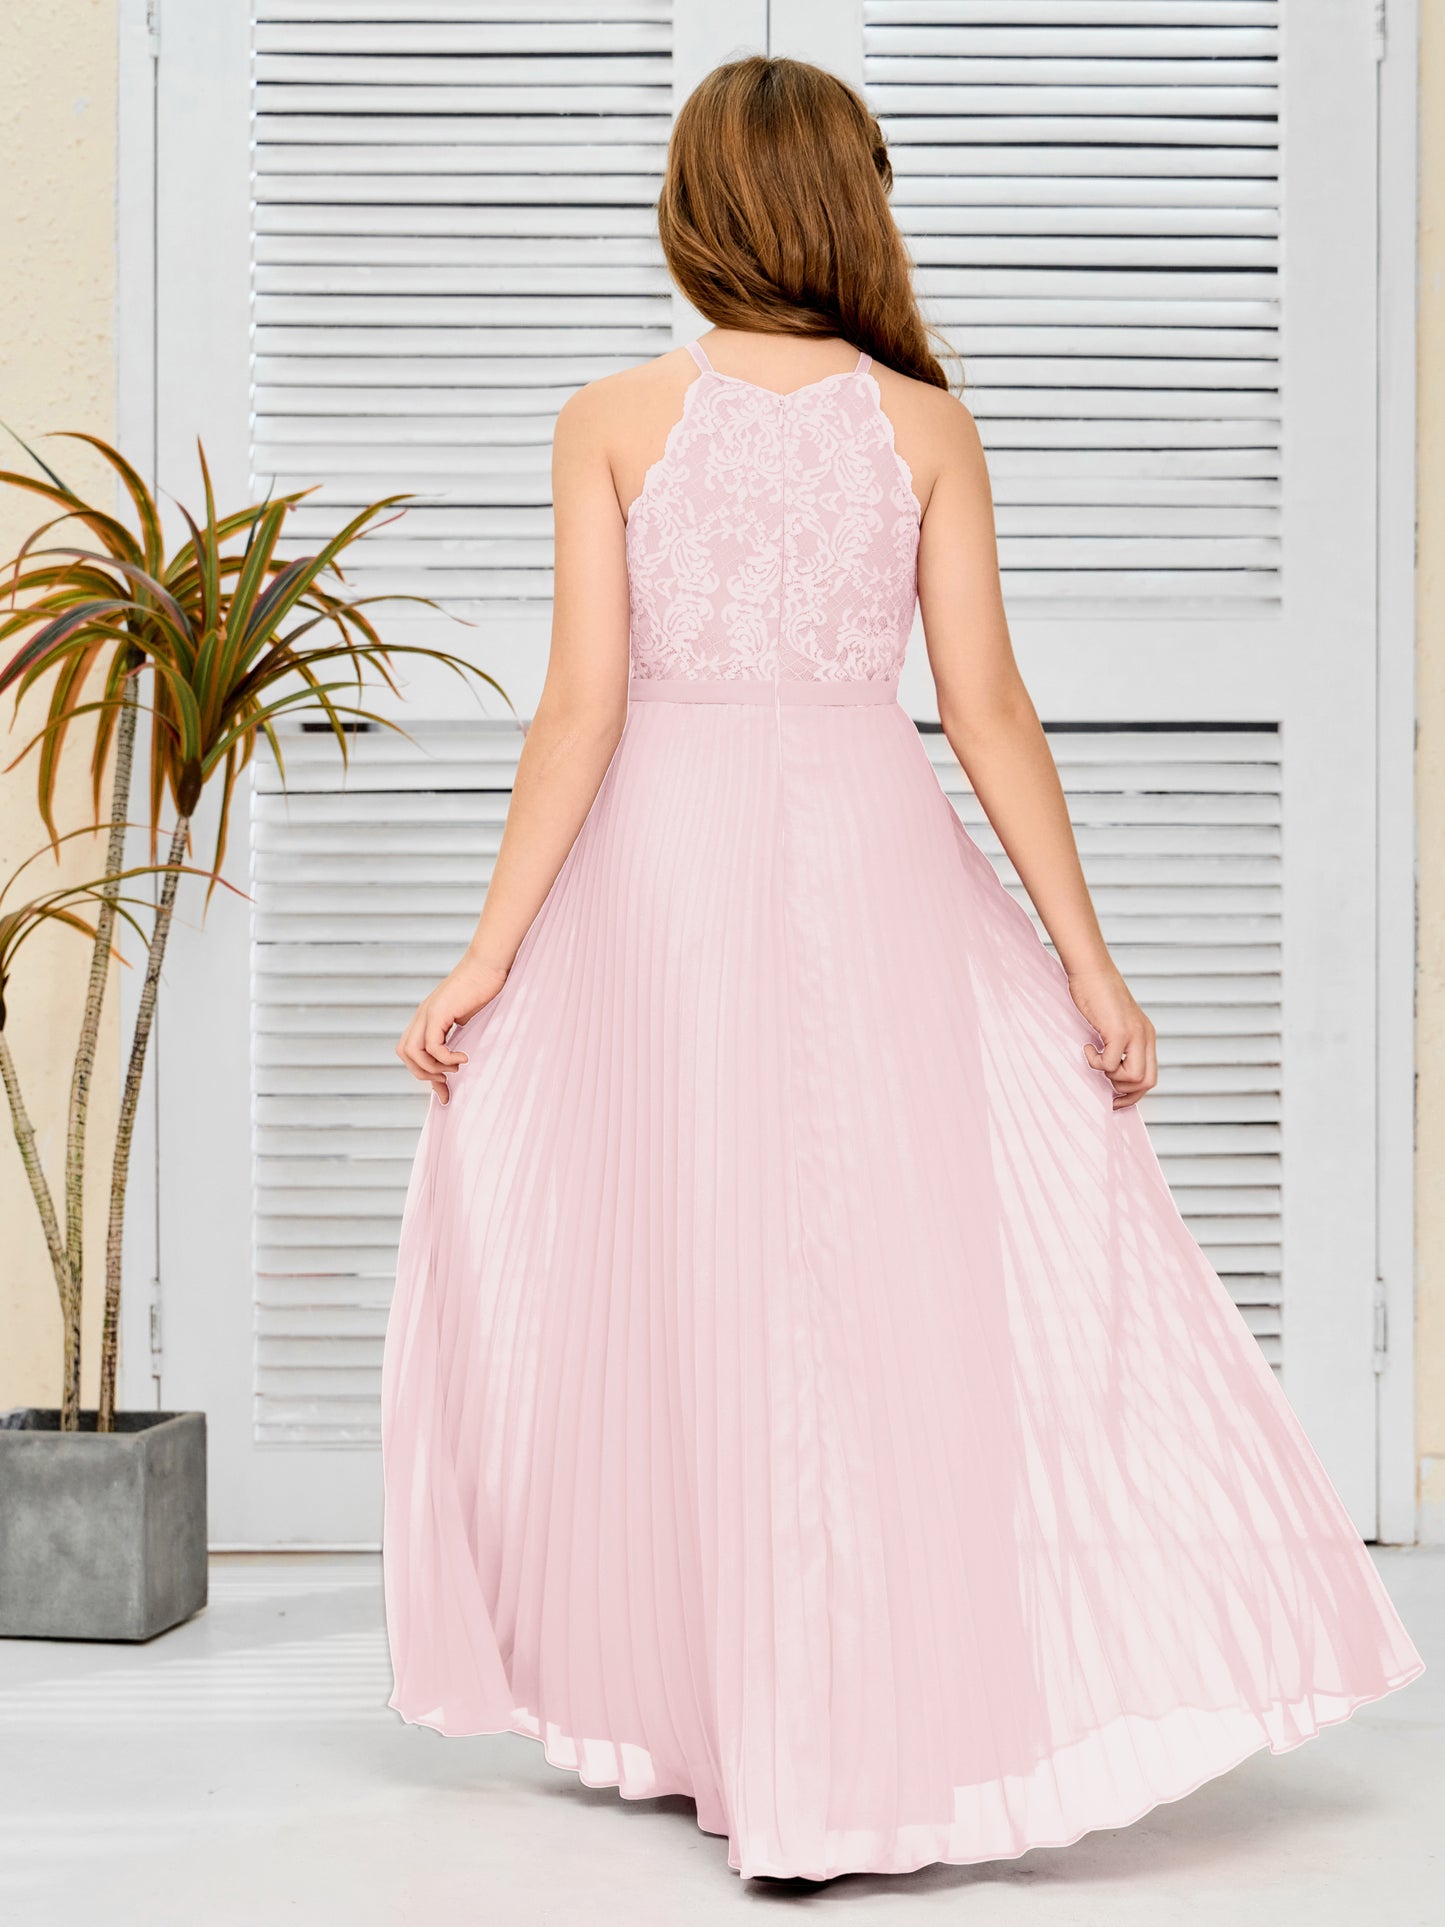 Halter A Line Chiffon Lace Junior Bridesmaid Dress